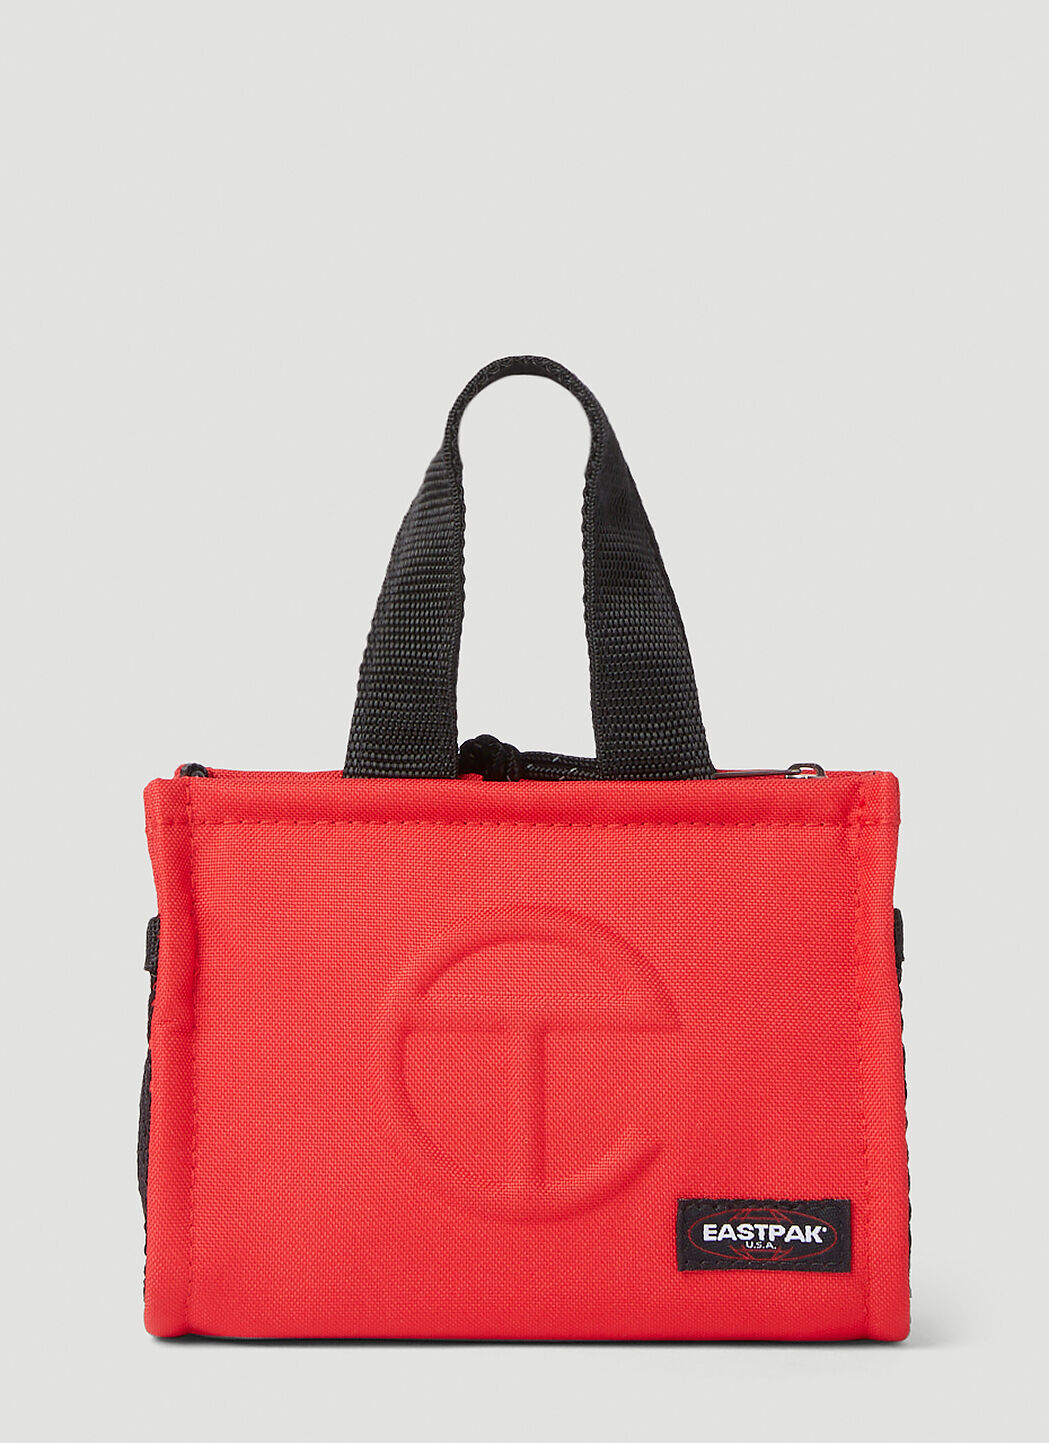 Eastpak x Telfar Shopper Small Crossbody Bag Red est0353019